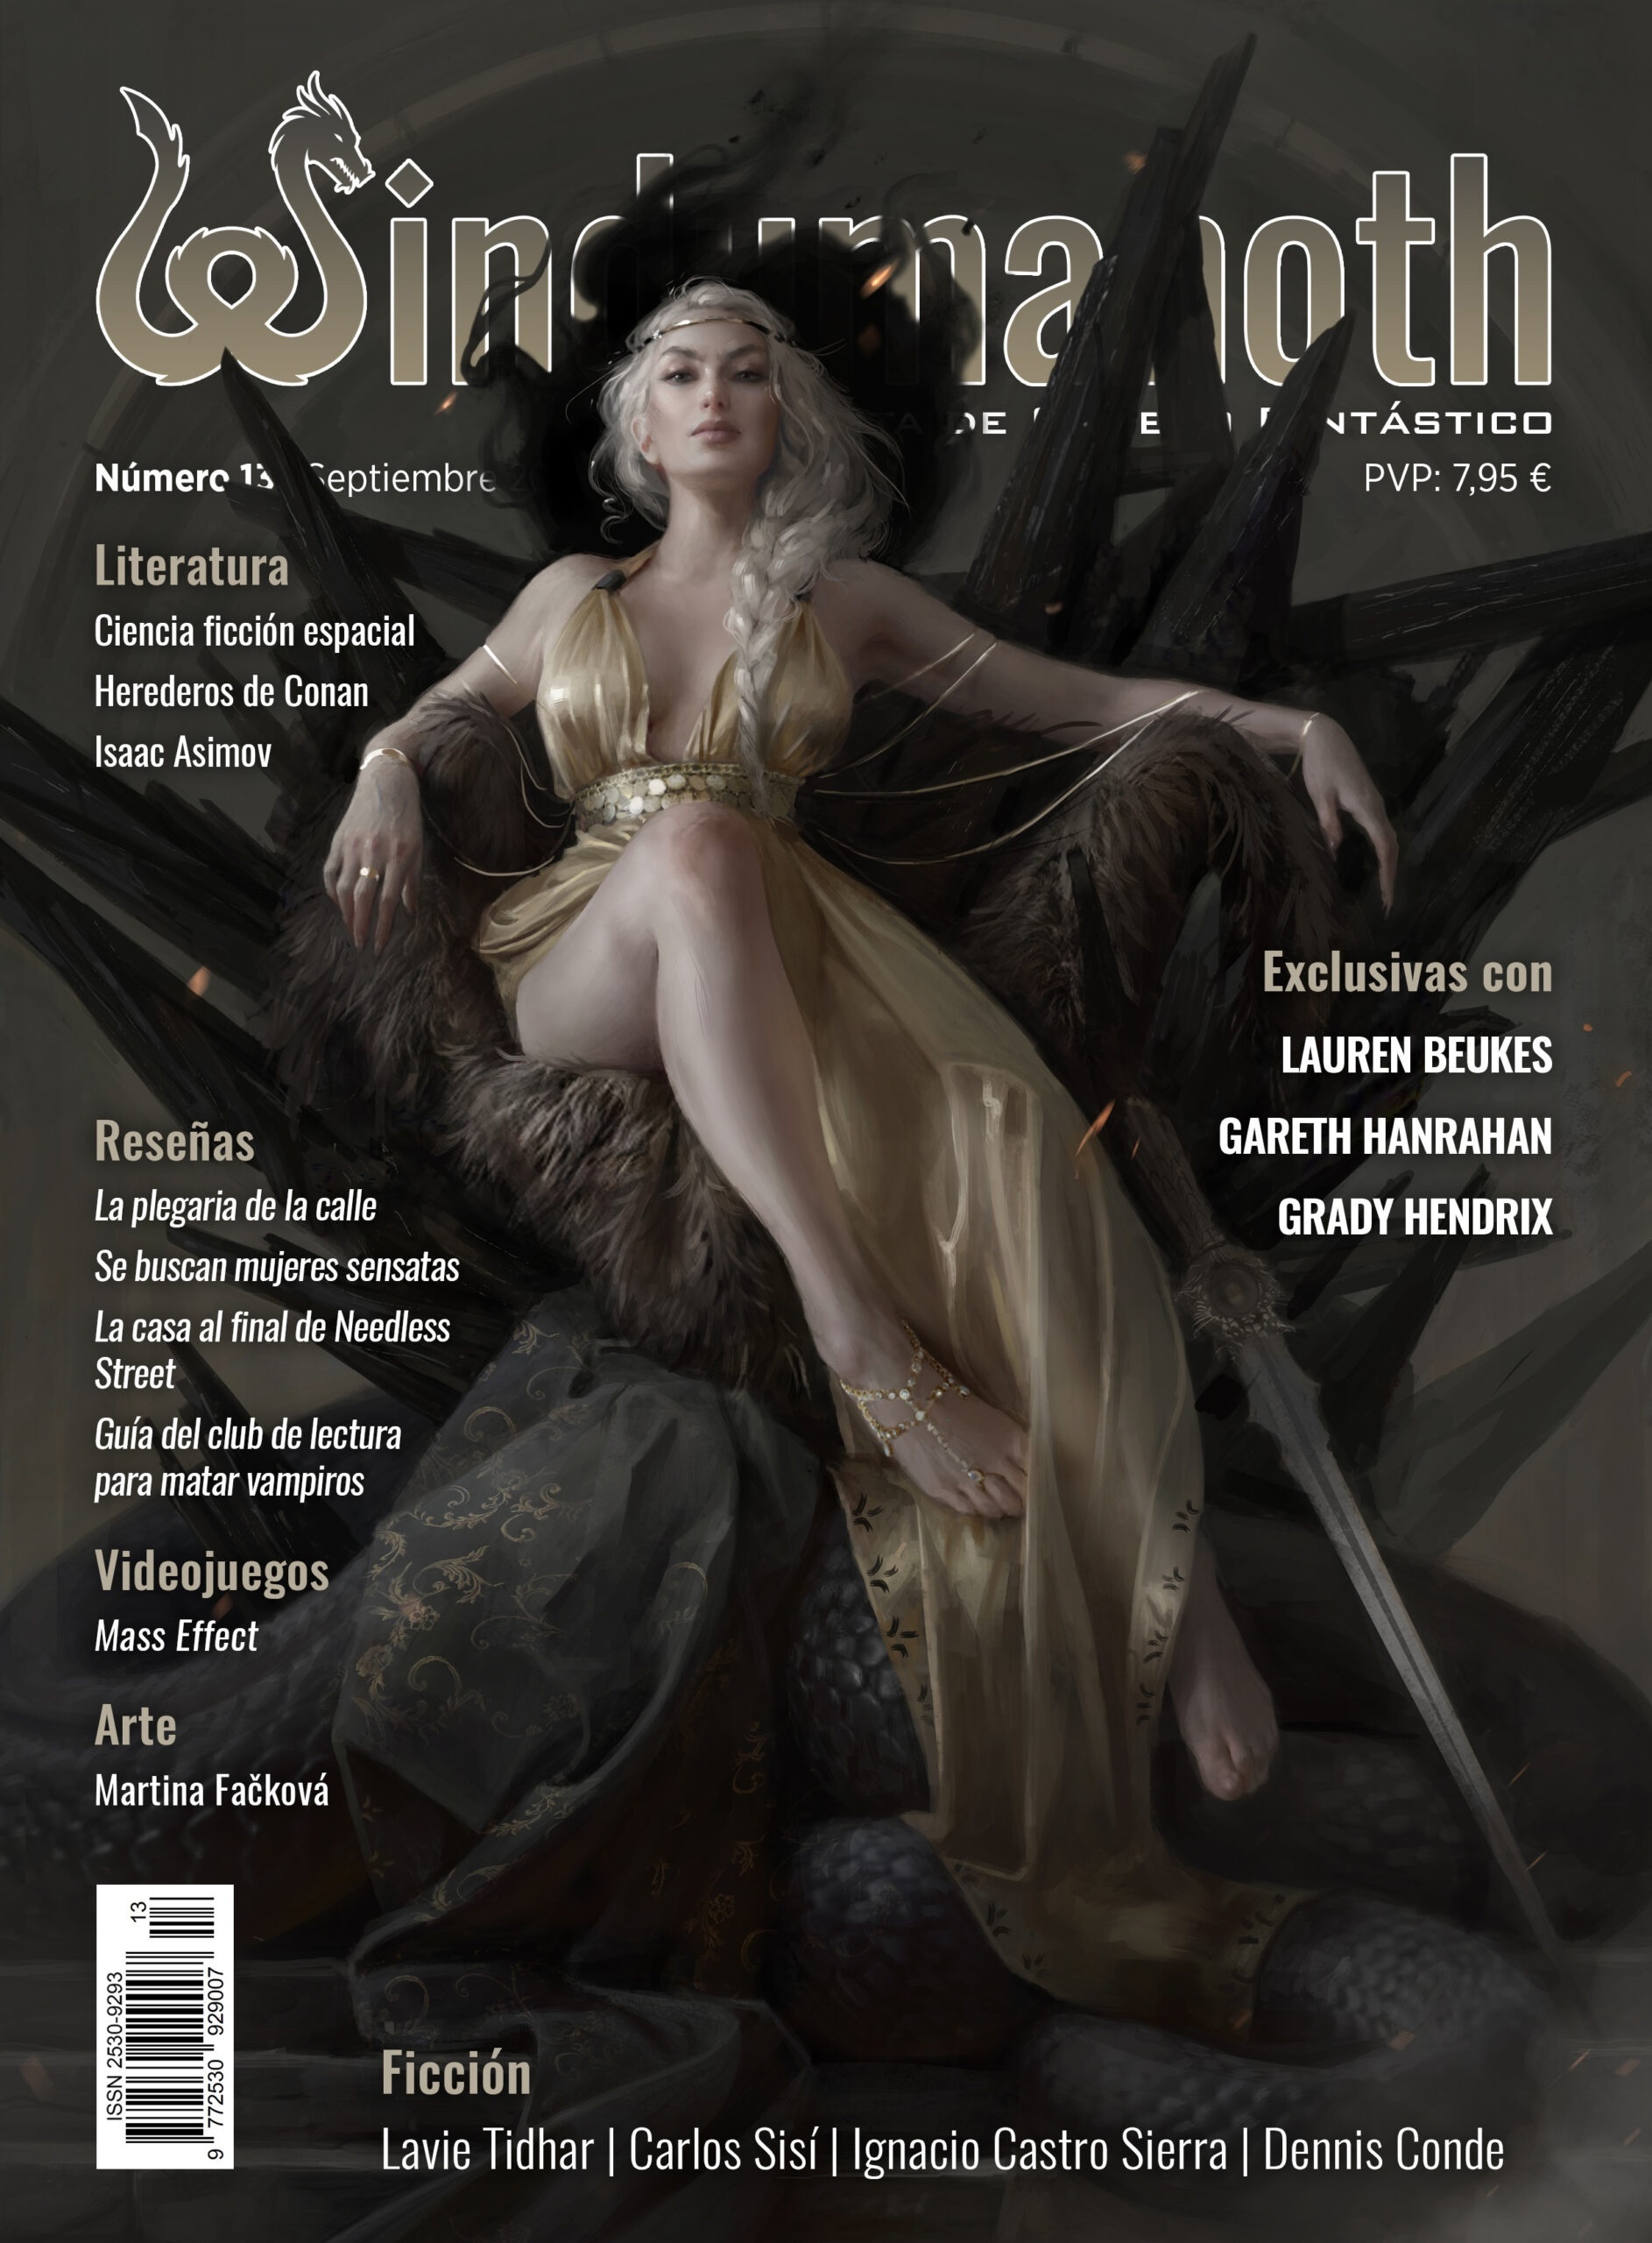 Windumanoth nº 13. Septiembre 2021 "Revista de género fantástico". 